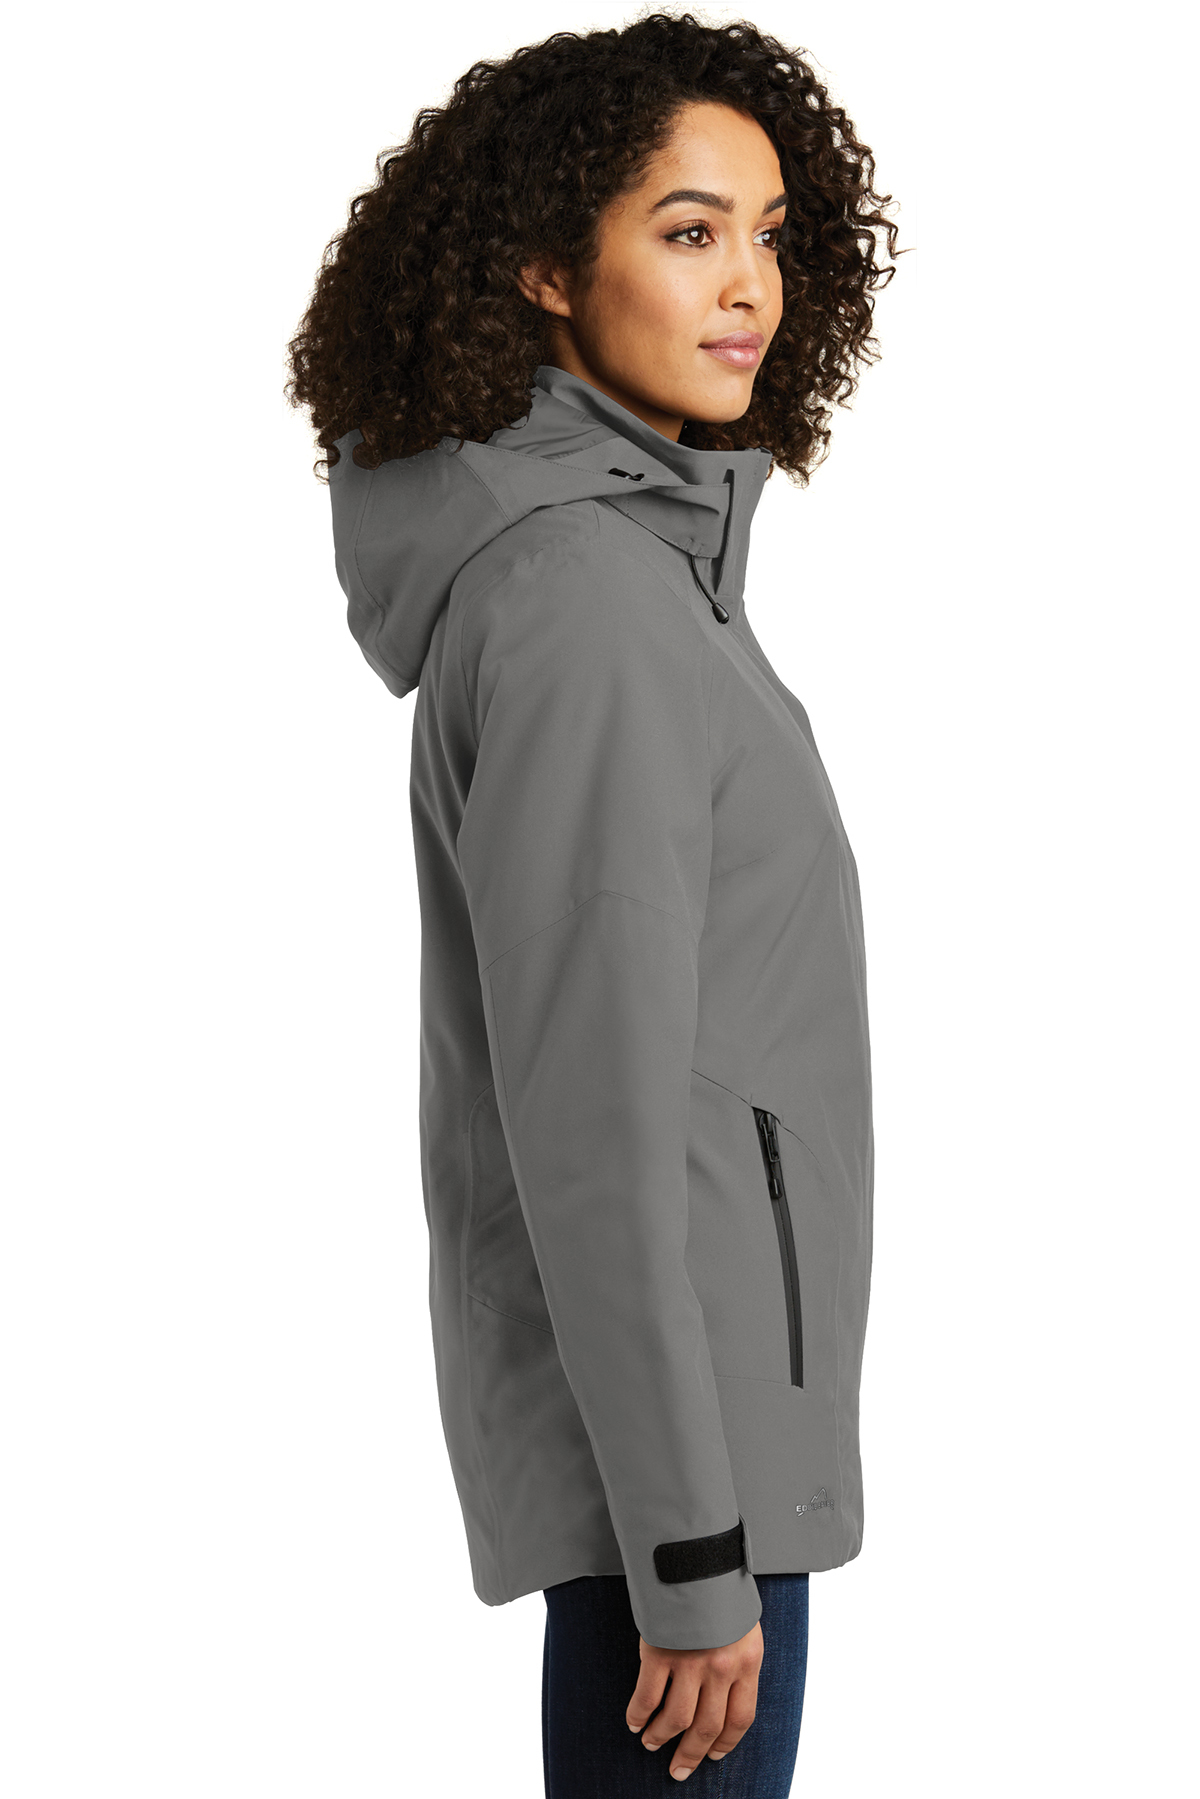 Eddie Bauer Ladies WeatherEdge Plus Insulated Jacket | Product 